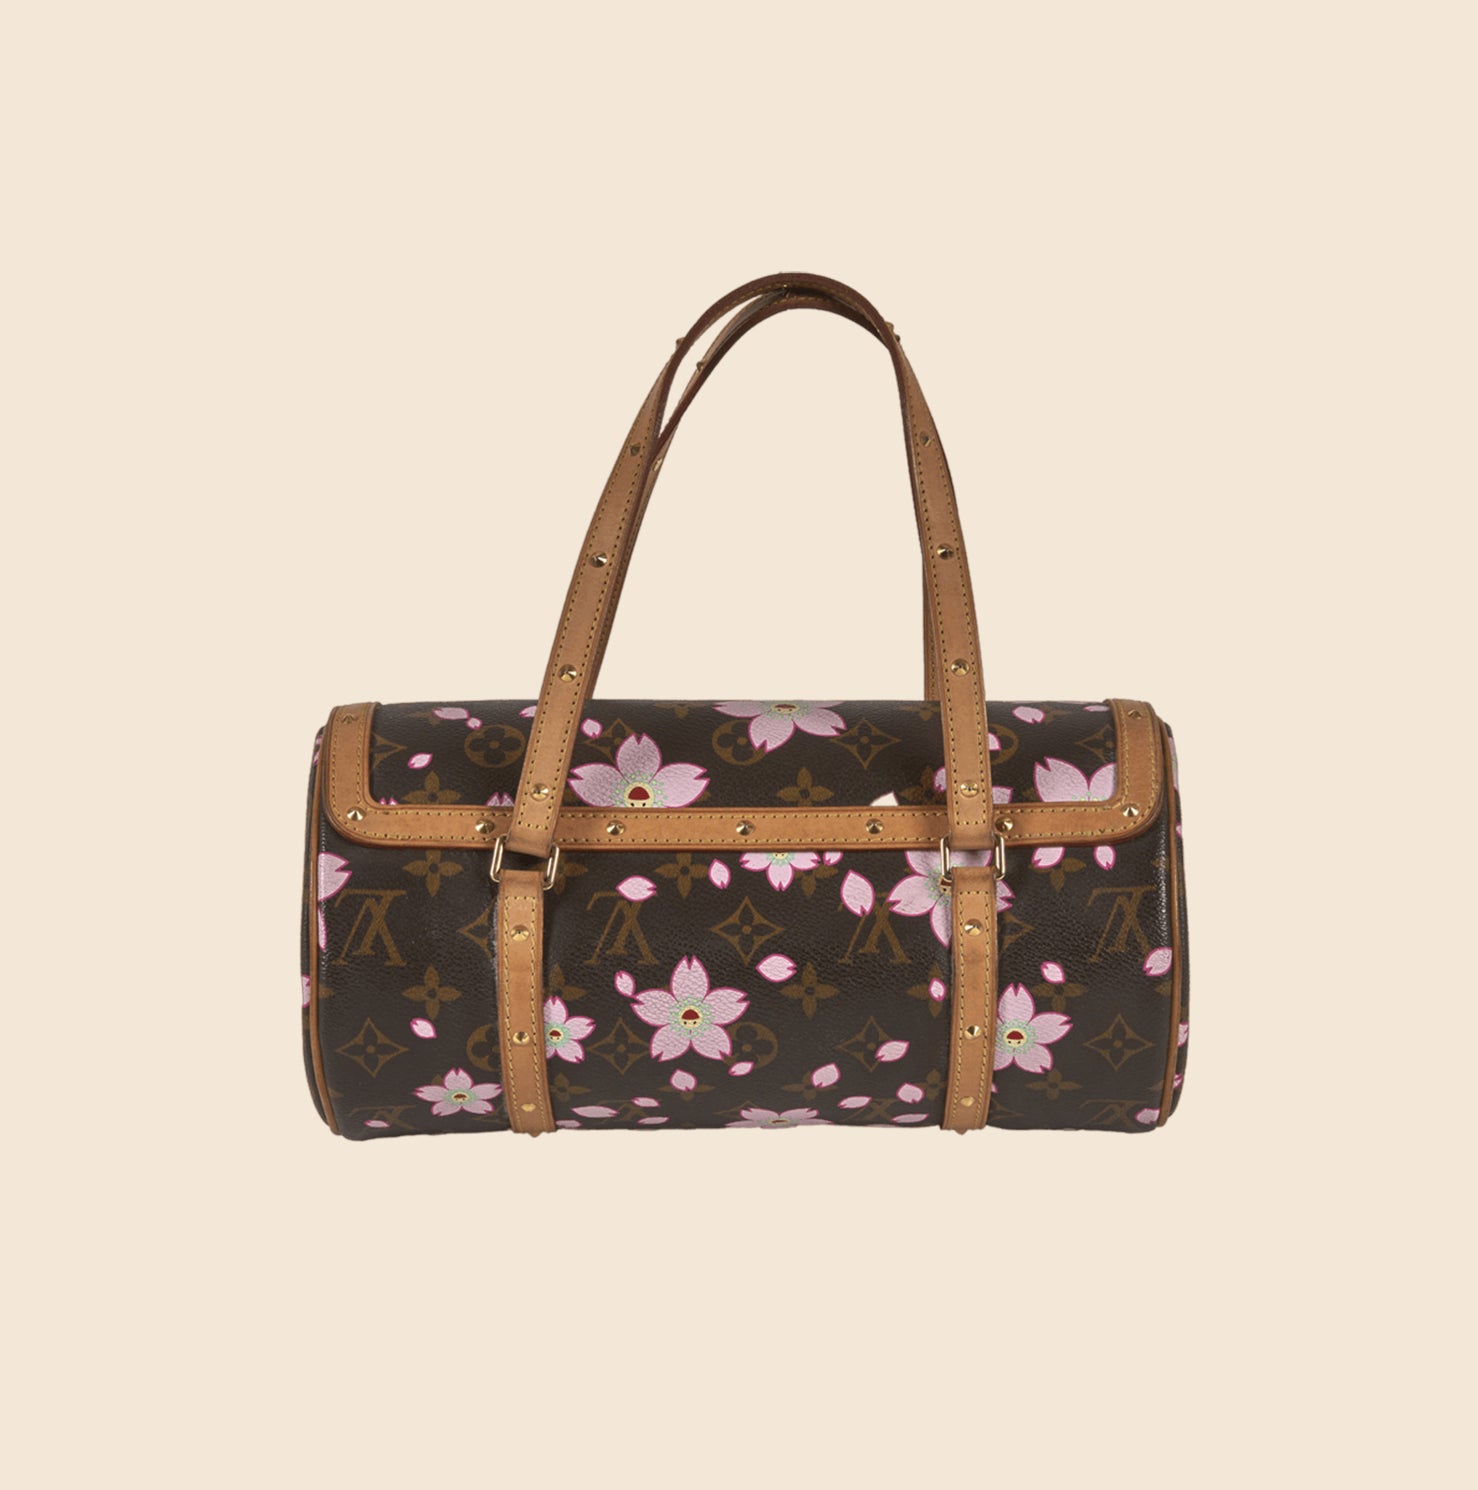 LOUIS VUITTON x Takashi Murakami Cherry Blossom Handbag Bag M92008 AR0033